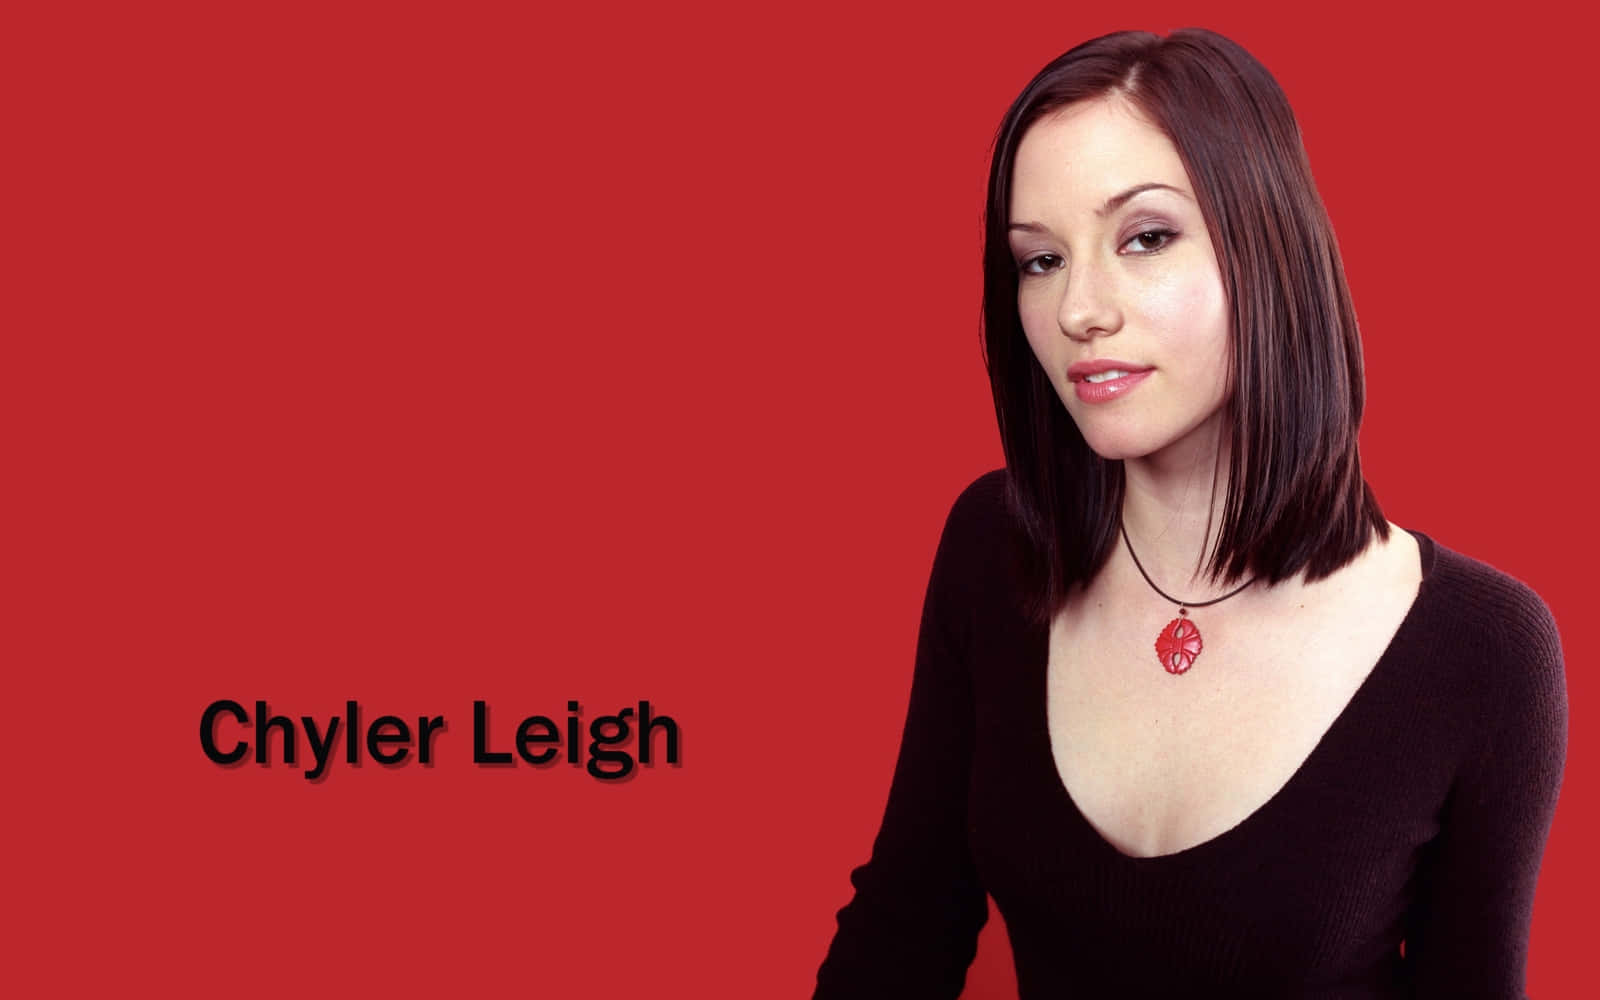 Chyler Leigh posing in an elegant red dress Wallpaper